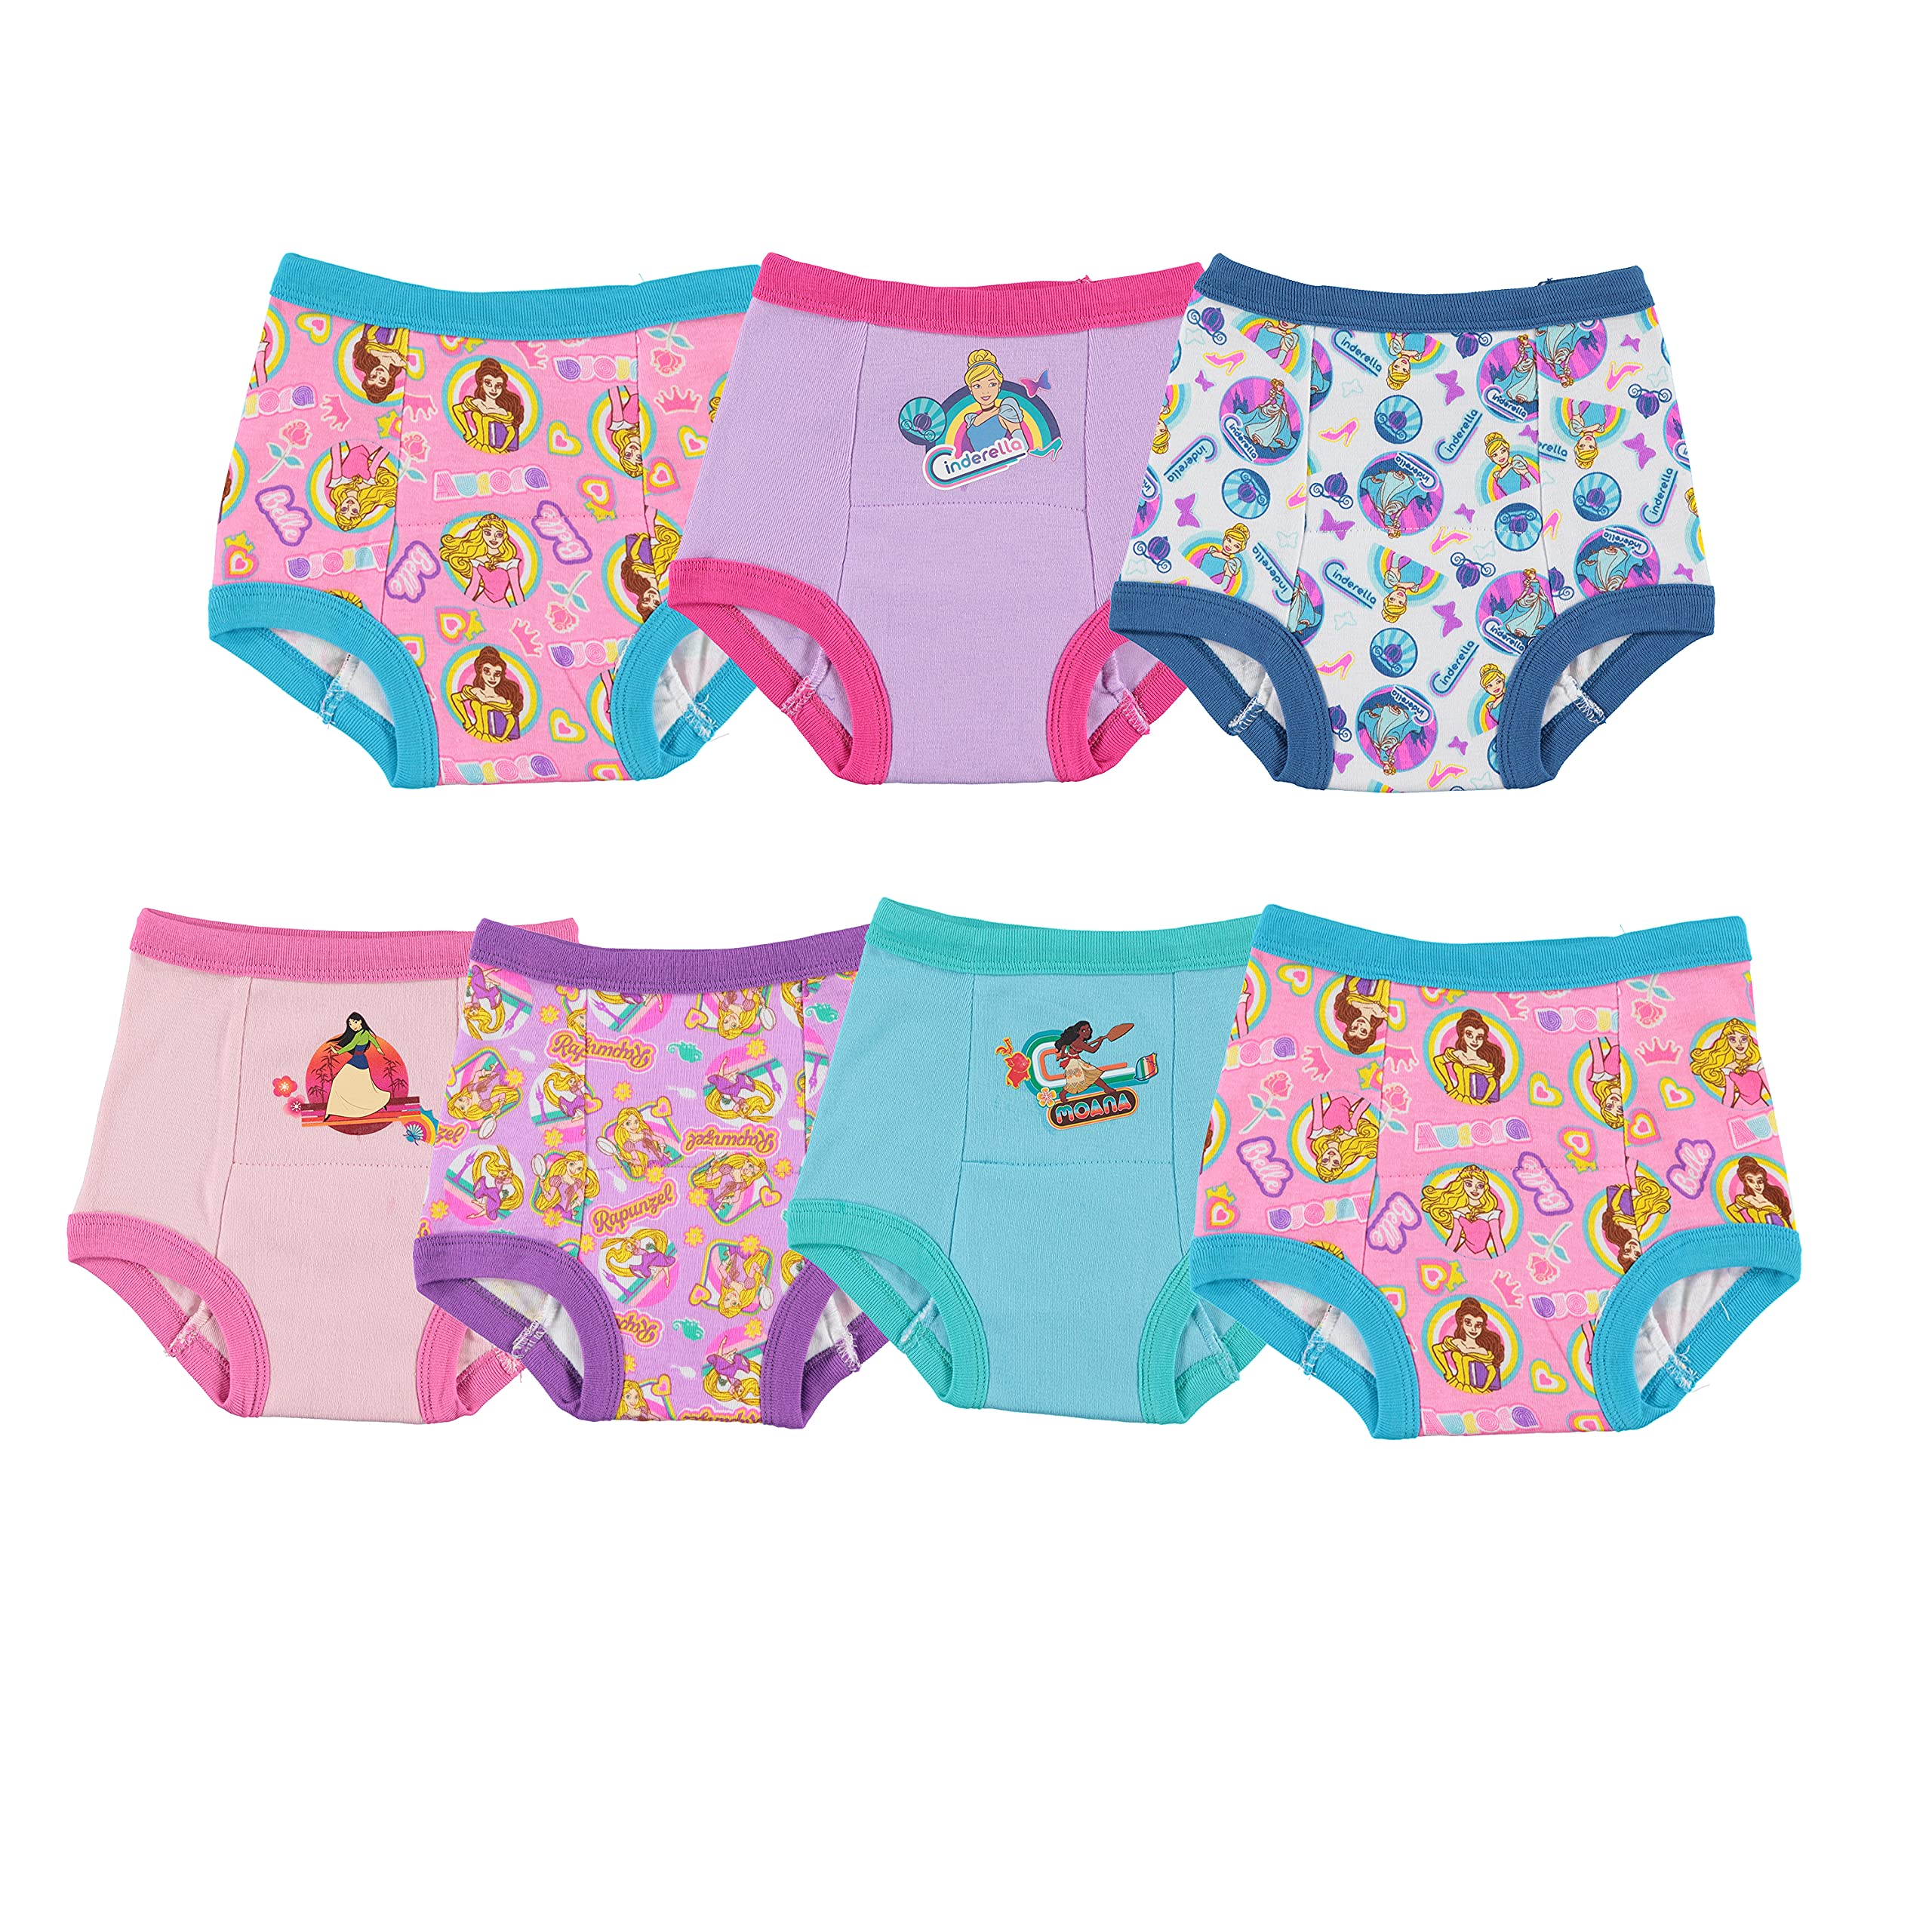 Disney Moana Briefs Underwear Toddler Girls Panties 